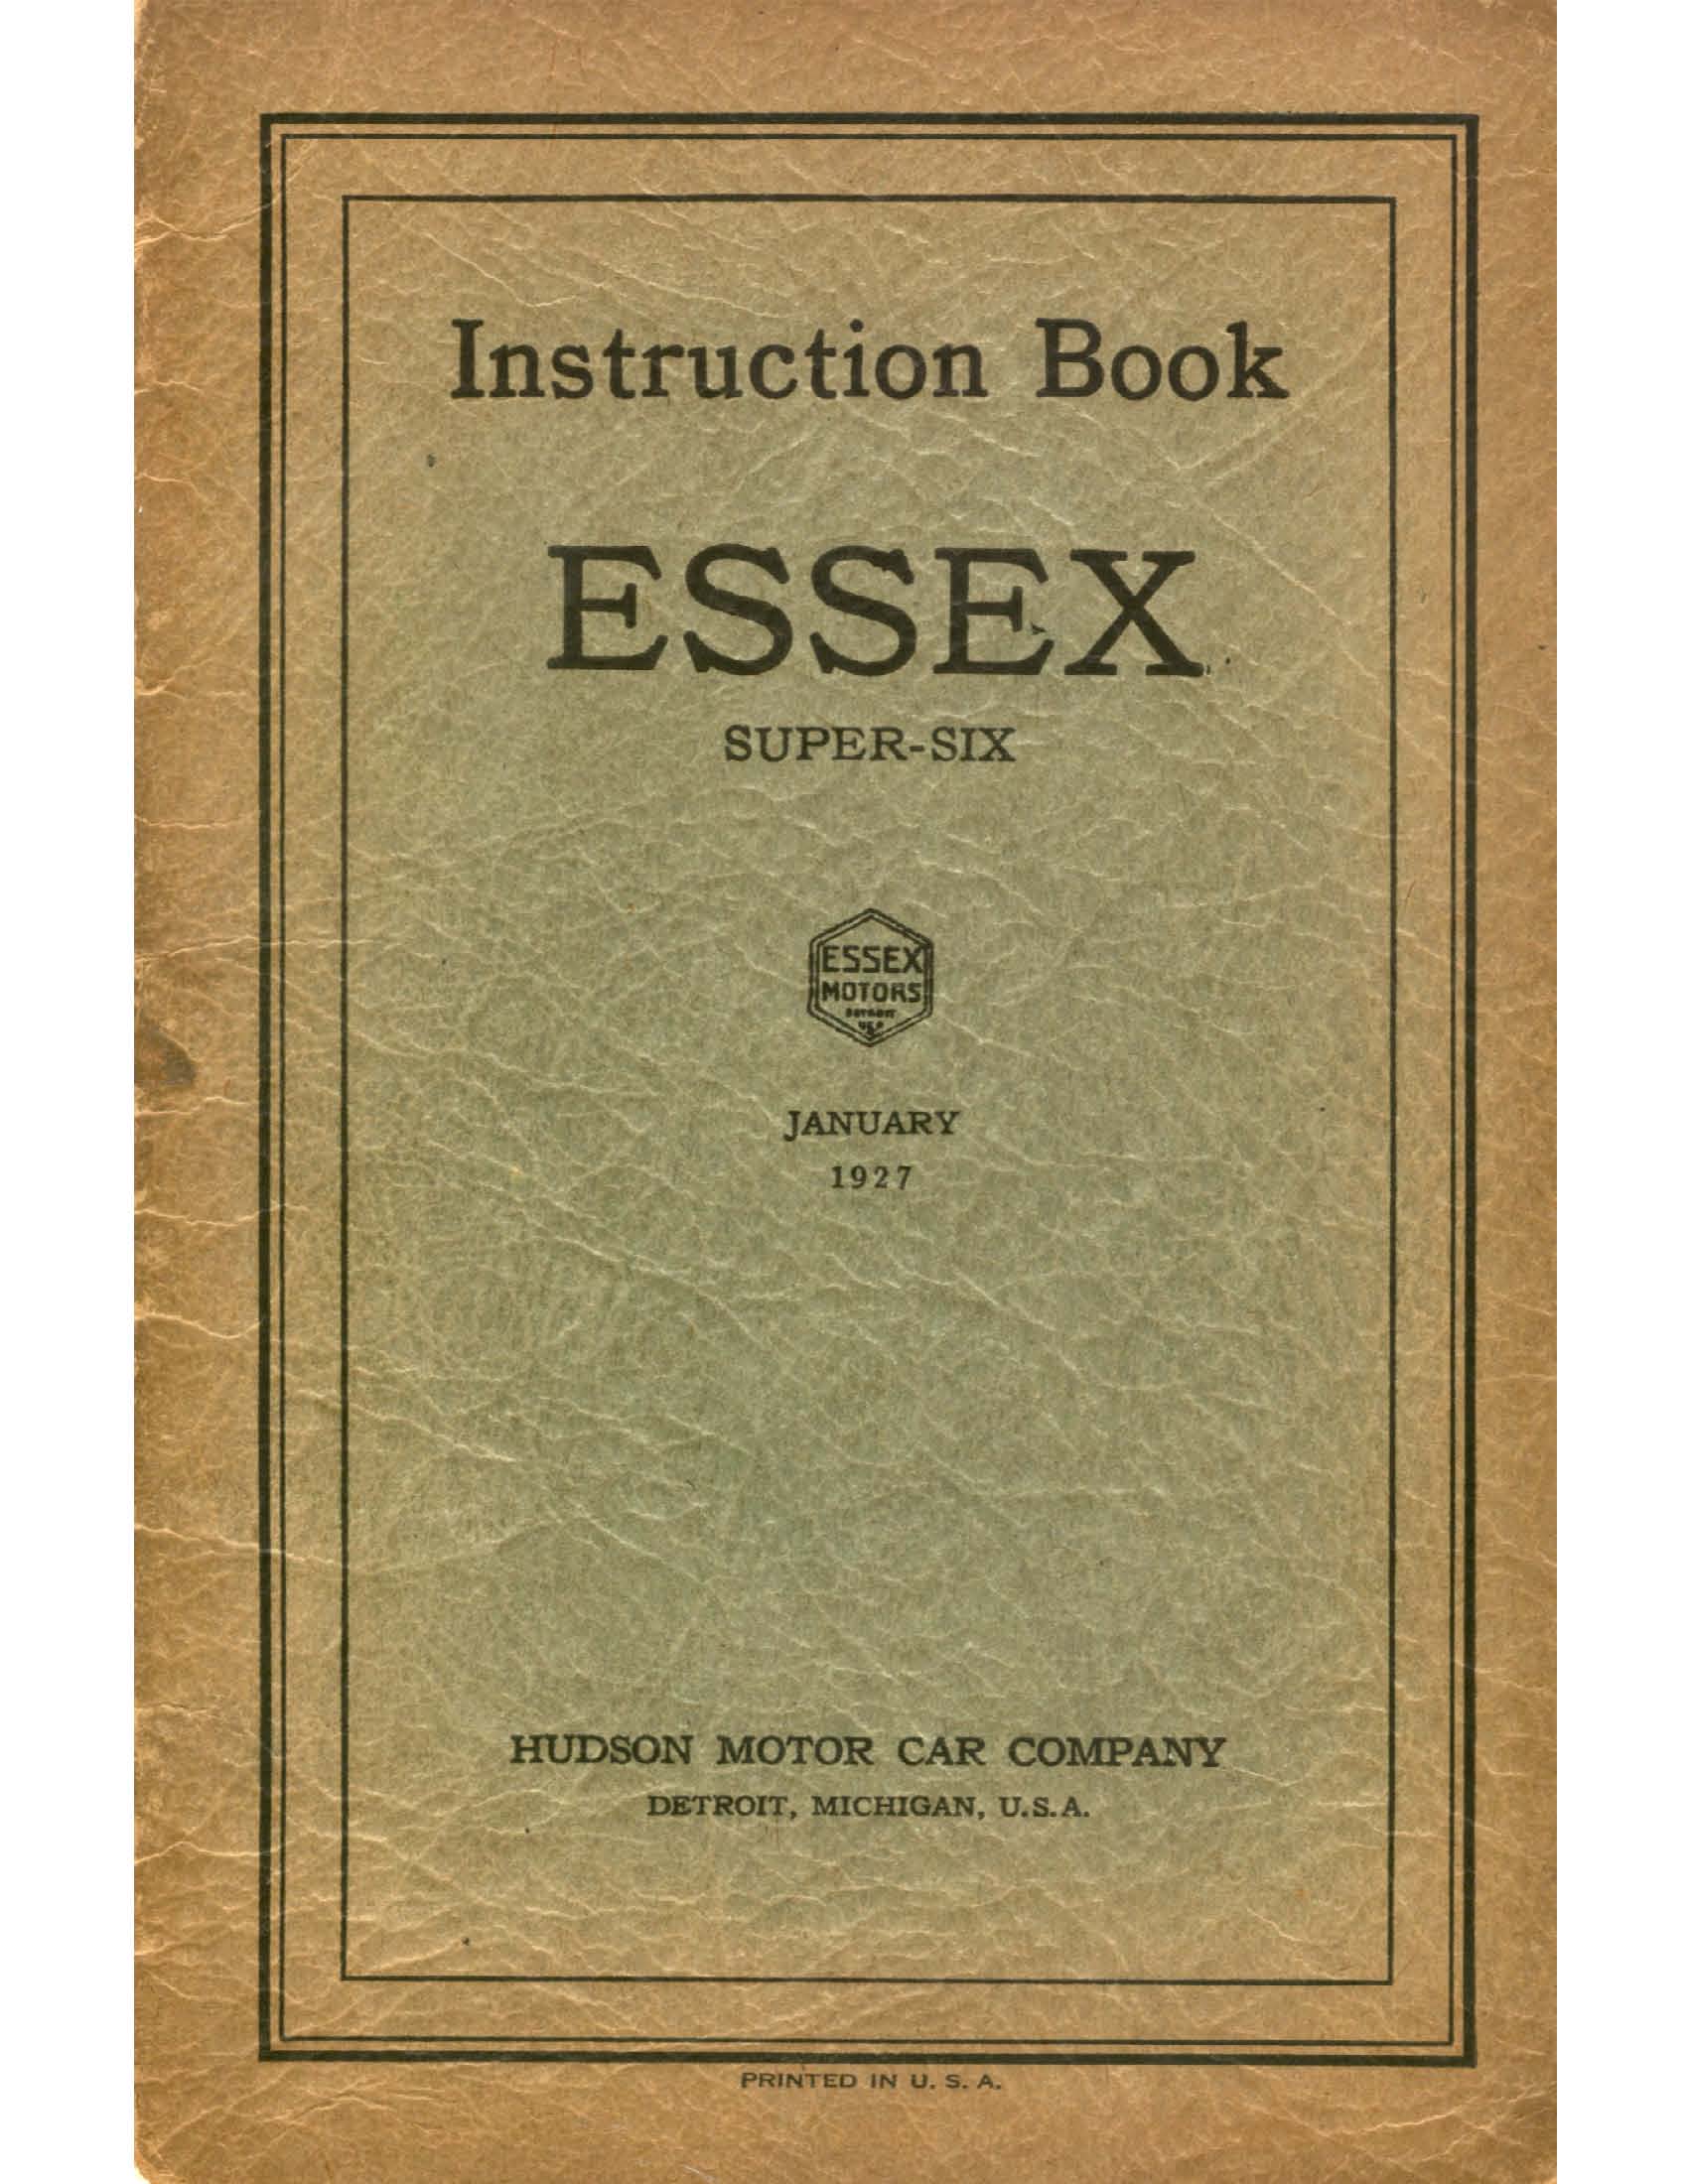 1927 Essex Instruction Book